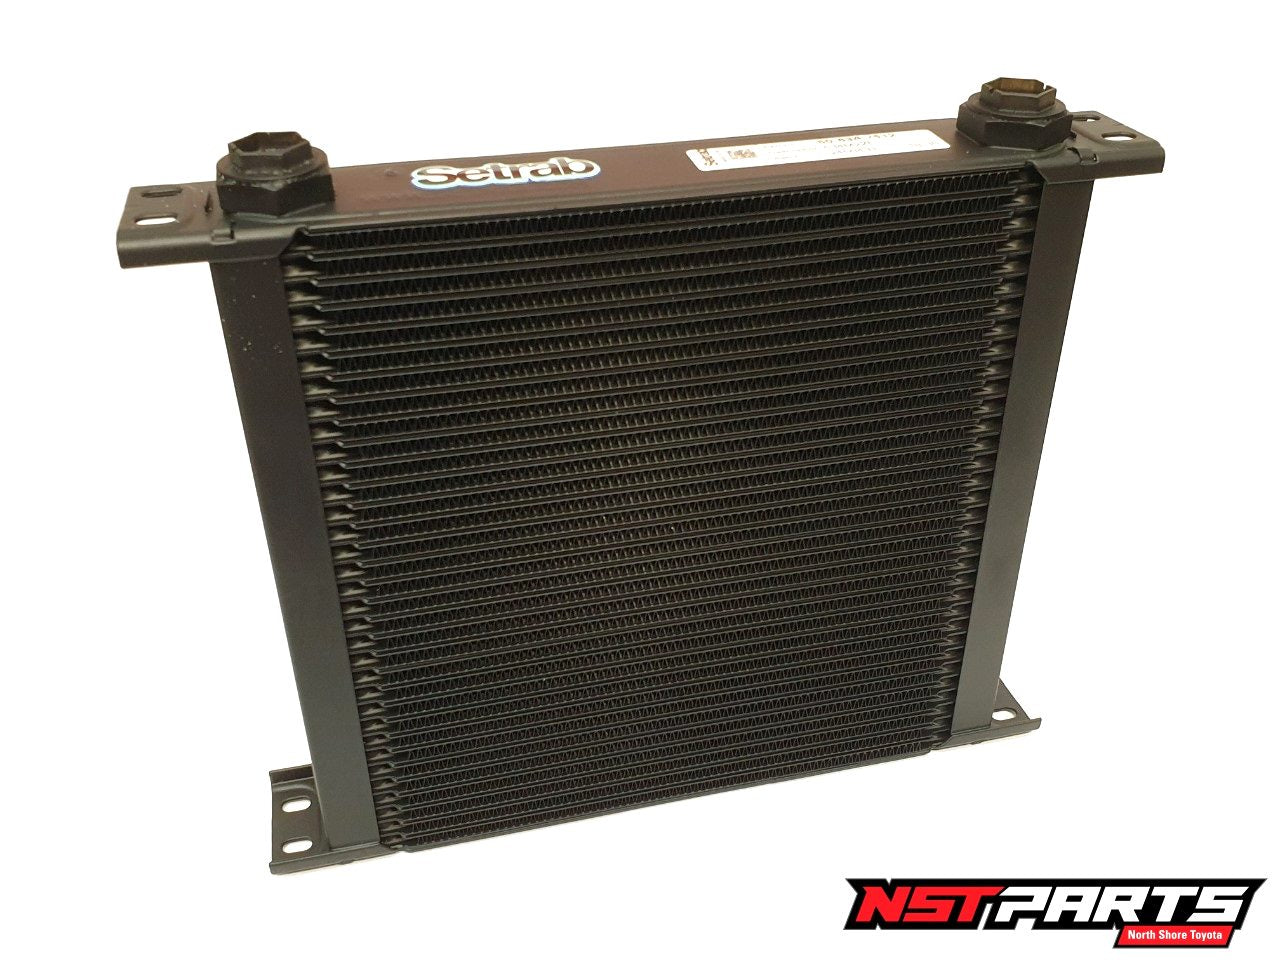 Setrab 6-Series 34 Row Oil Cooler Core